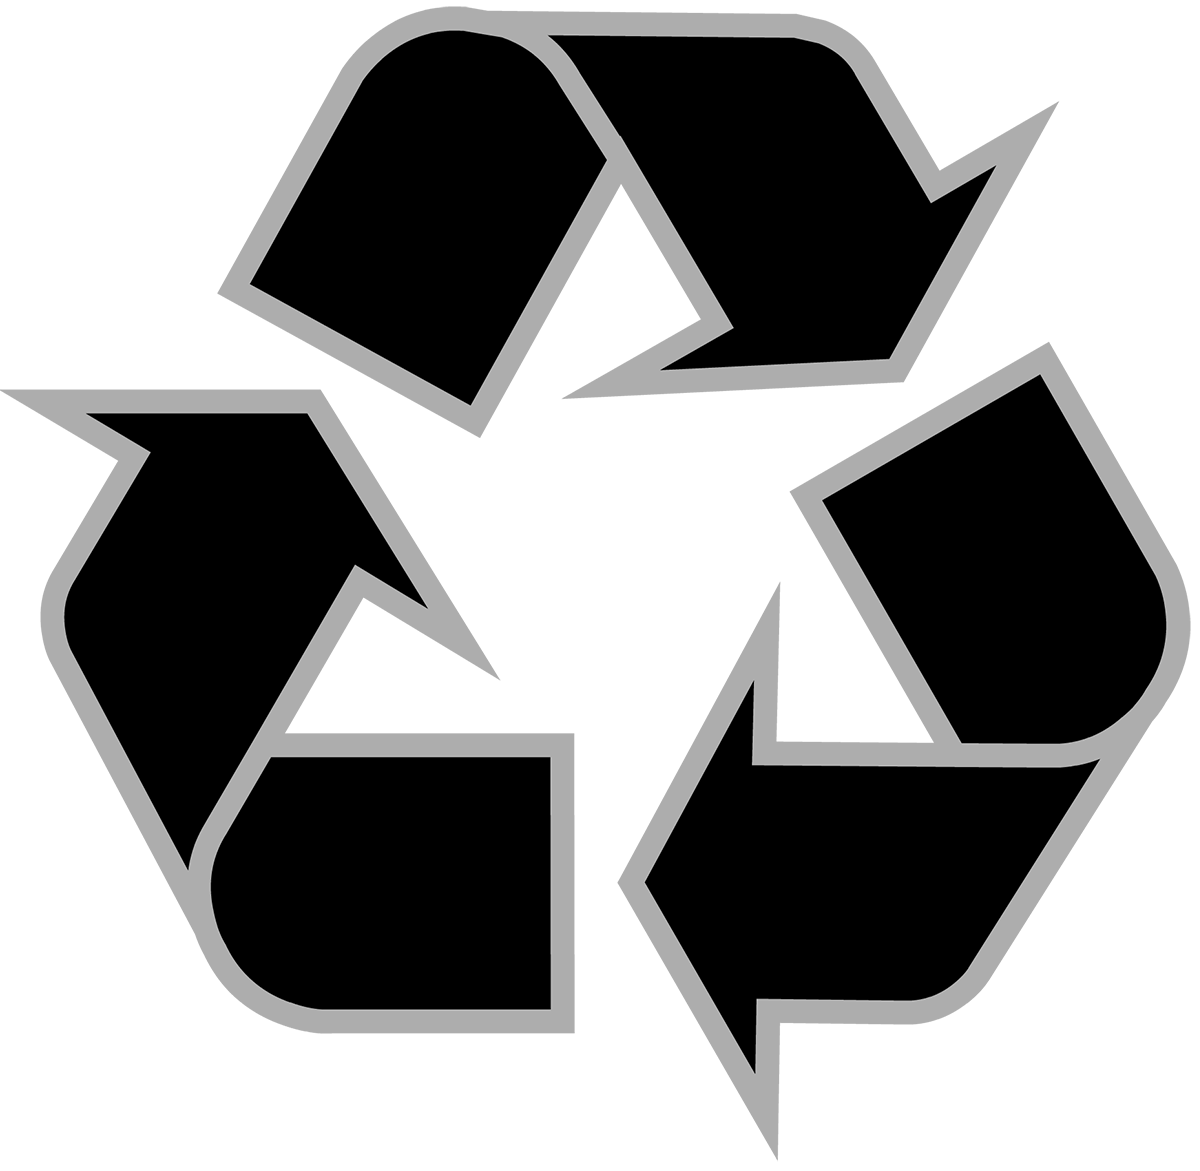 Recyle Logo - Recycling Symbol the Original Recycle Logo